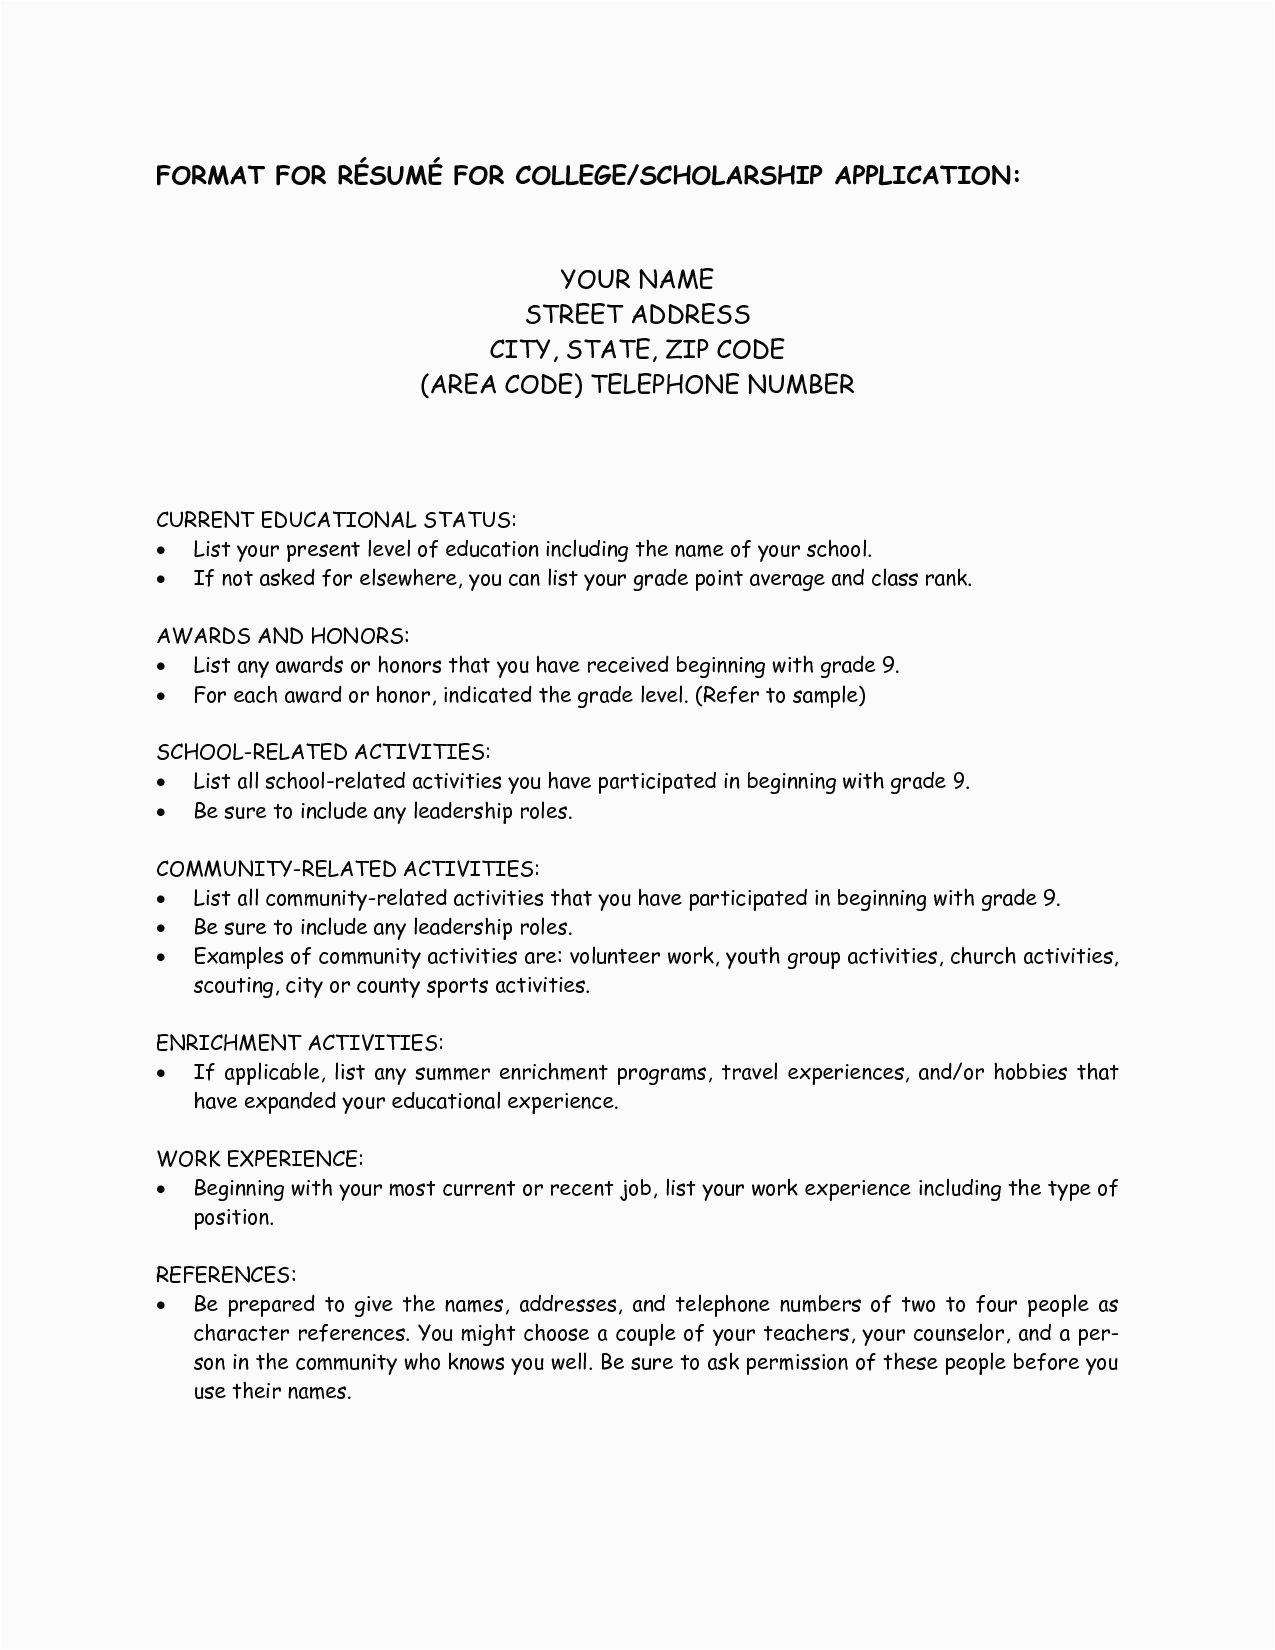 sample resume for high school students applying for scholarships